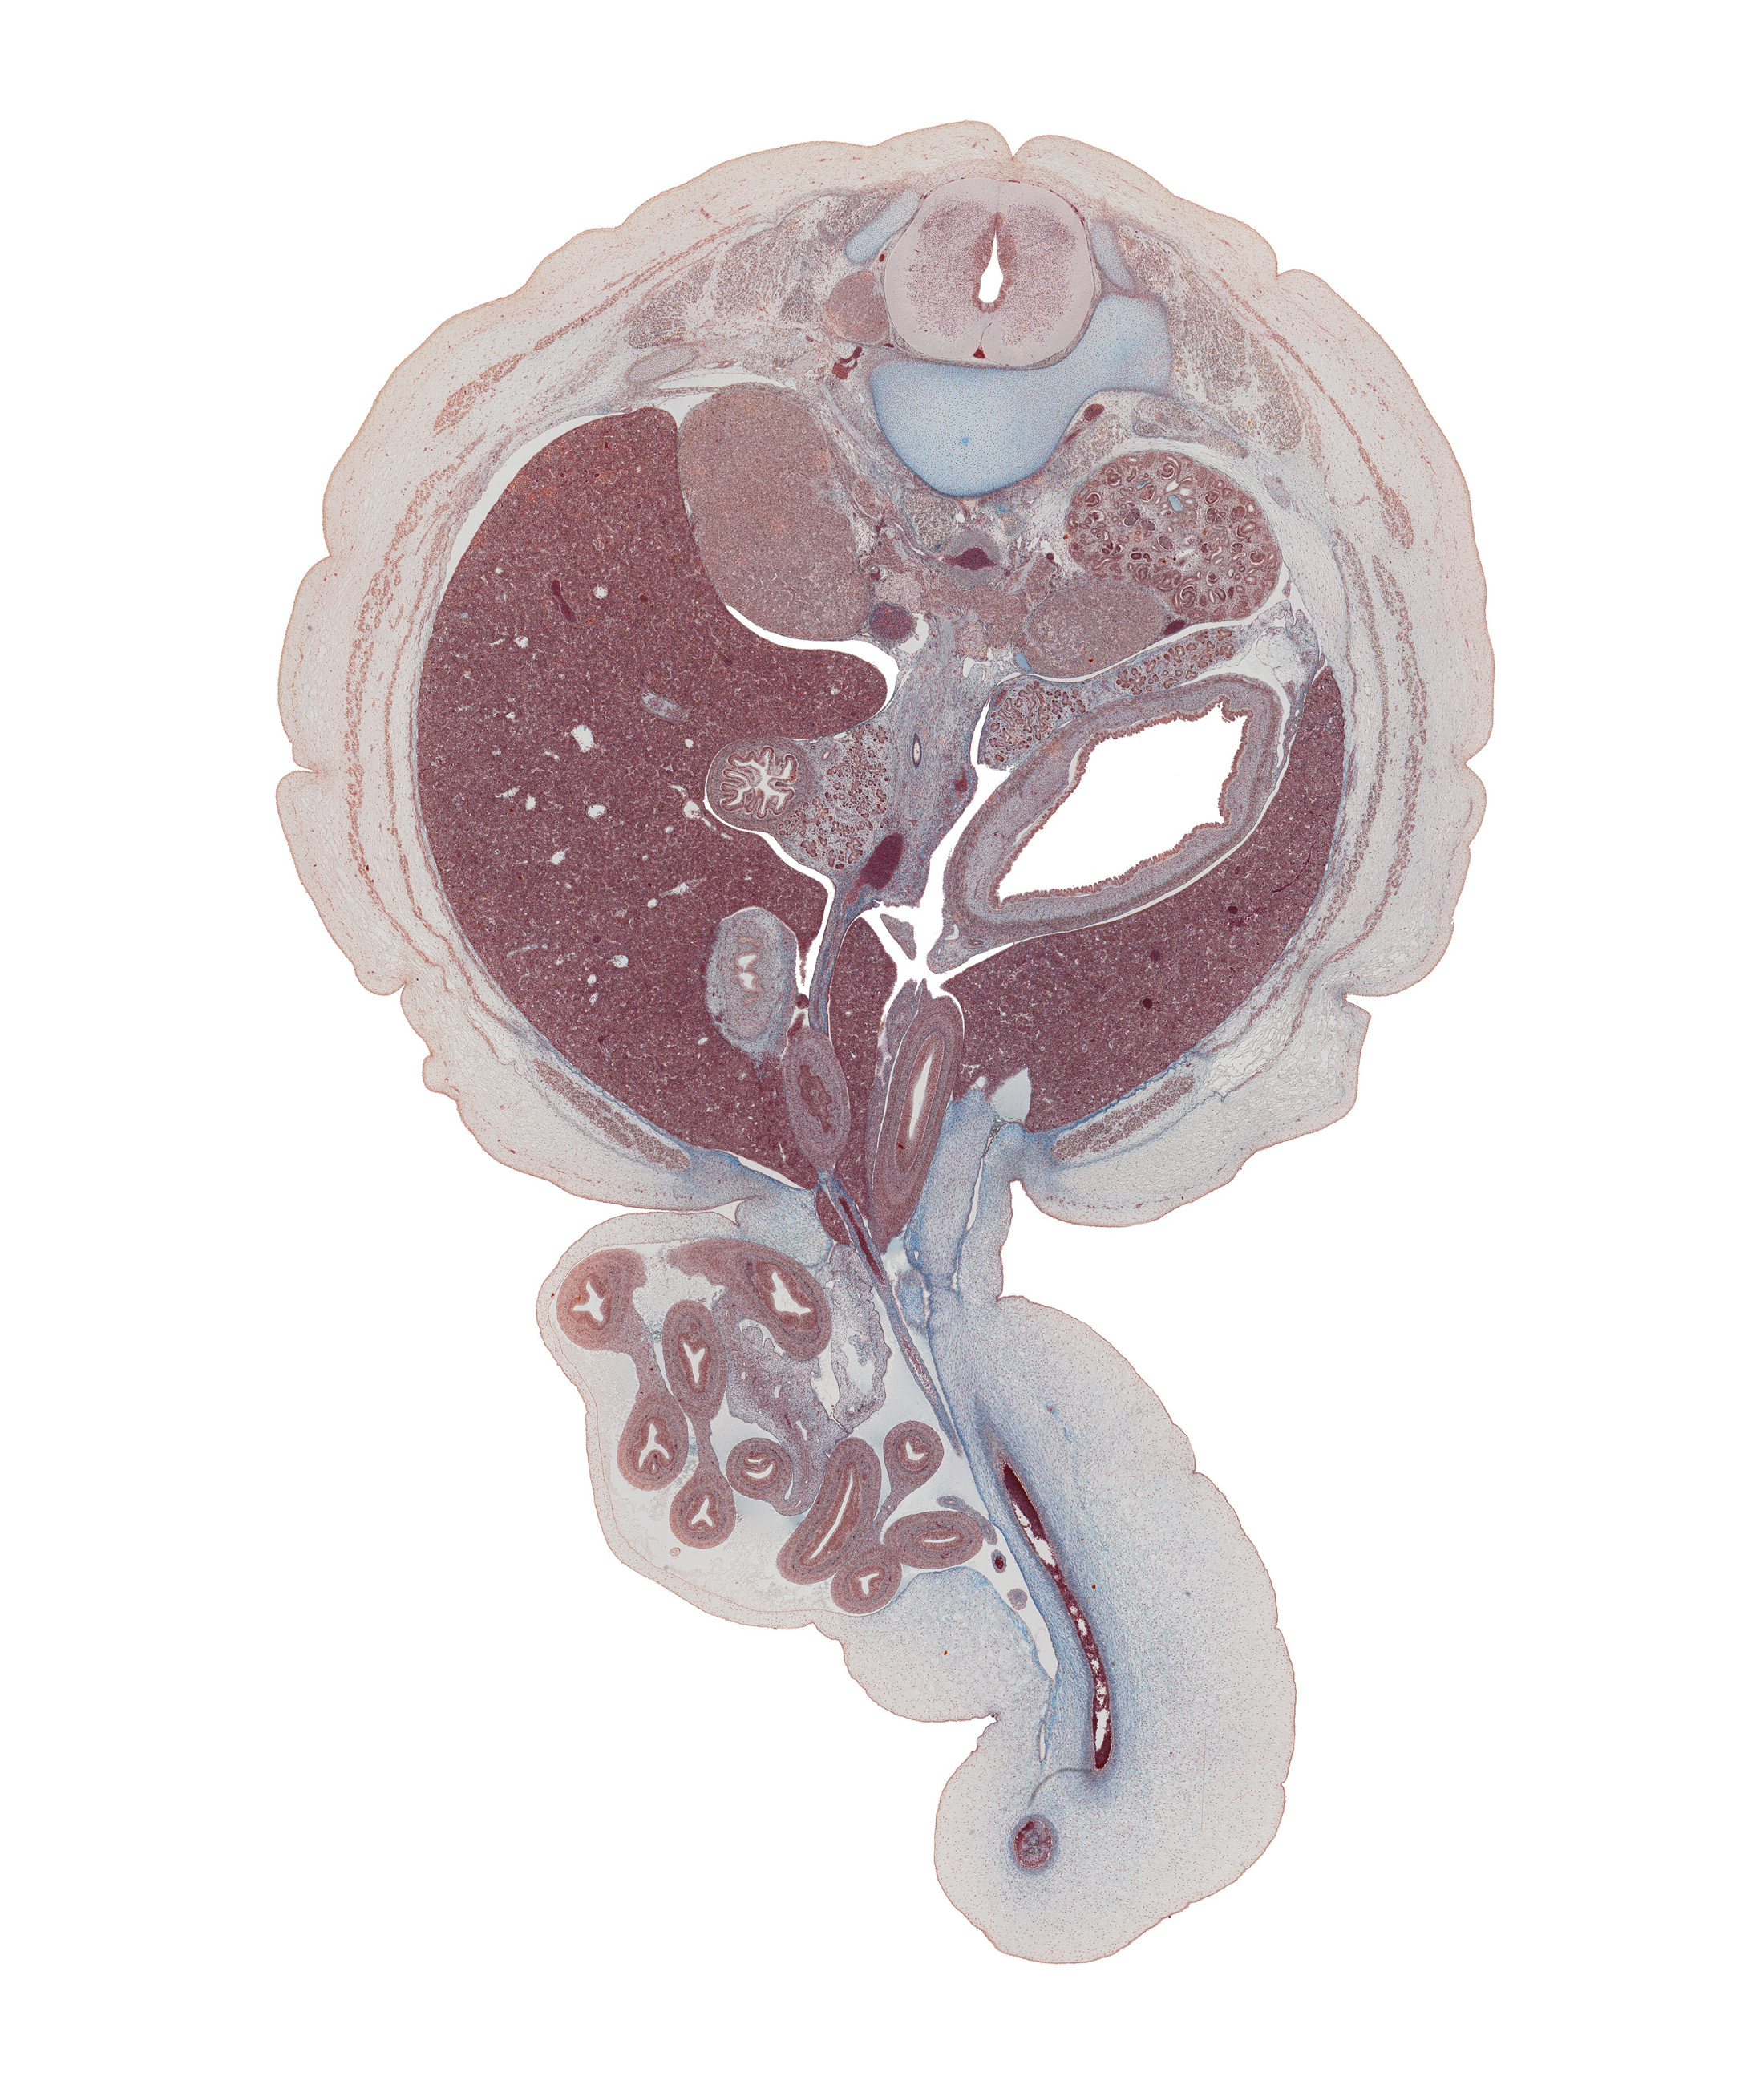 T-11 / T-12 interganglion region, body of dorsal pancreas, caudal edge of pleural recess, cephalic edge of jejunum, colon, descending part of duodenum, diaphragm, gall bladder, head of ventral pancreas, ileum, inferior vena cava, kidney (metanephros), left umbilical artery, lesser sac (omental bursa), mesentery, notochord, origin of left renal artery, origin of right renal artery, stomach, superior mesenteric artery, superior mesenteric vein, superior mesenteric vessels, suprarenal gland cortex, tail of dorsal pancreas, umbilical coelom, umbilical cord, umbilical vein, umbilical vesicle stalk